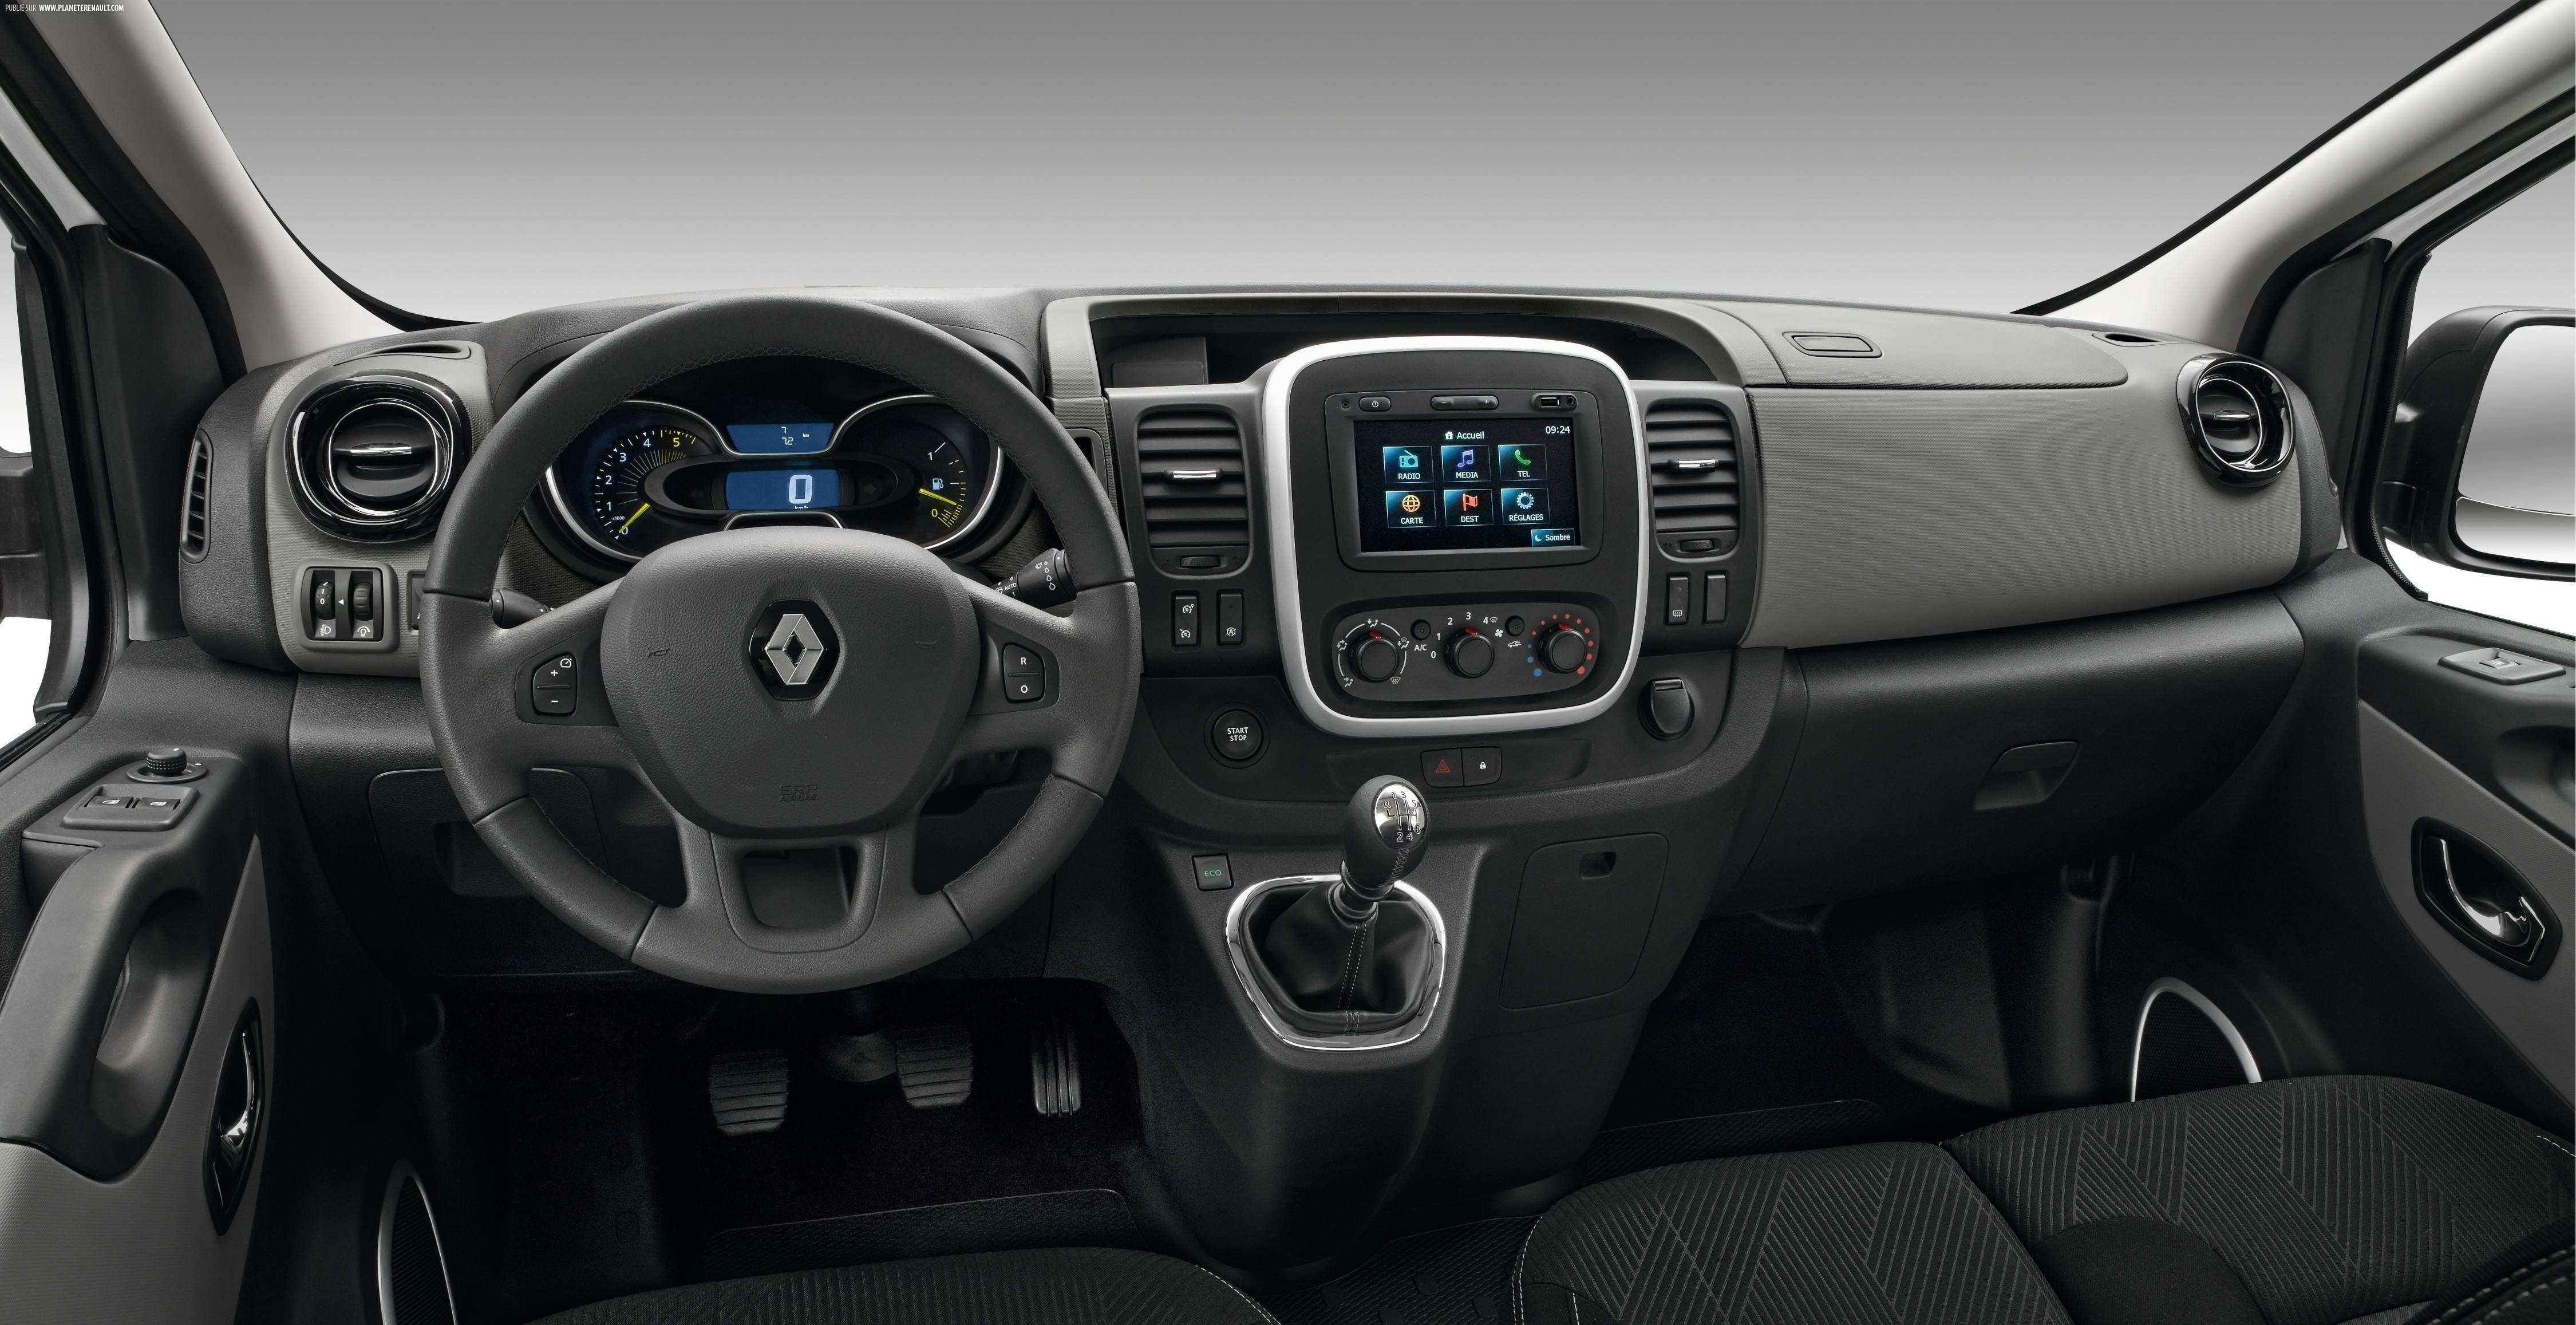 Renault Trafic interior photo